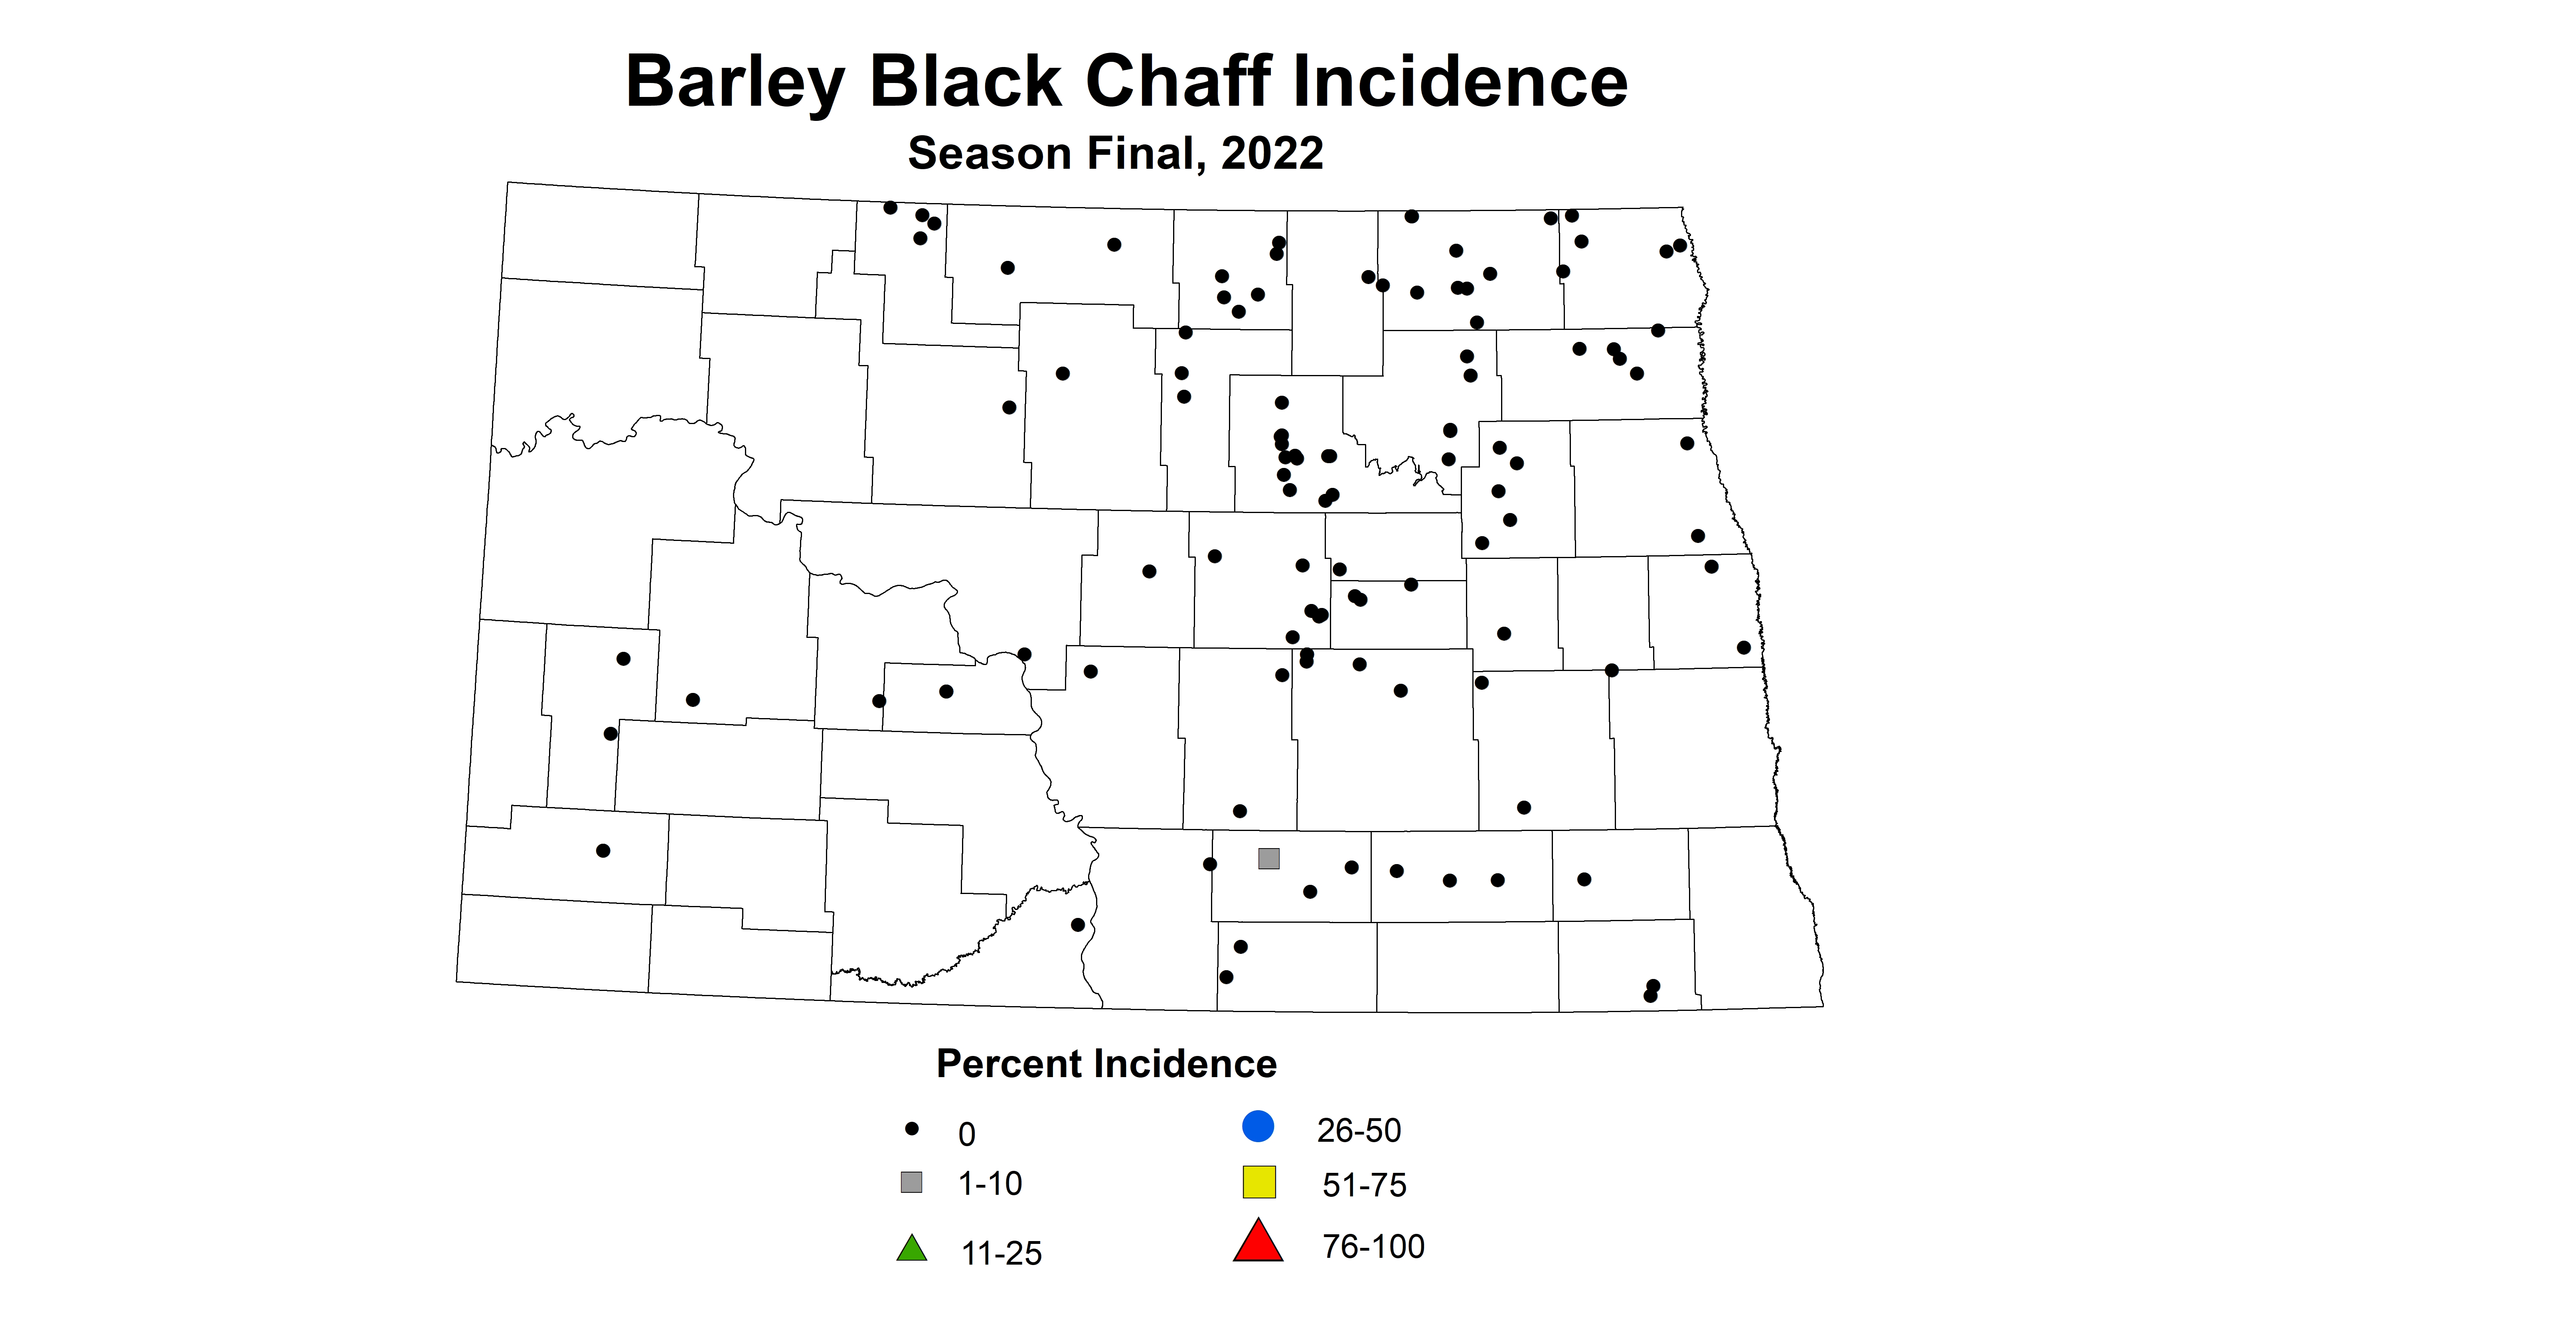 barley black chaff incidence 2022 season final